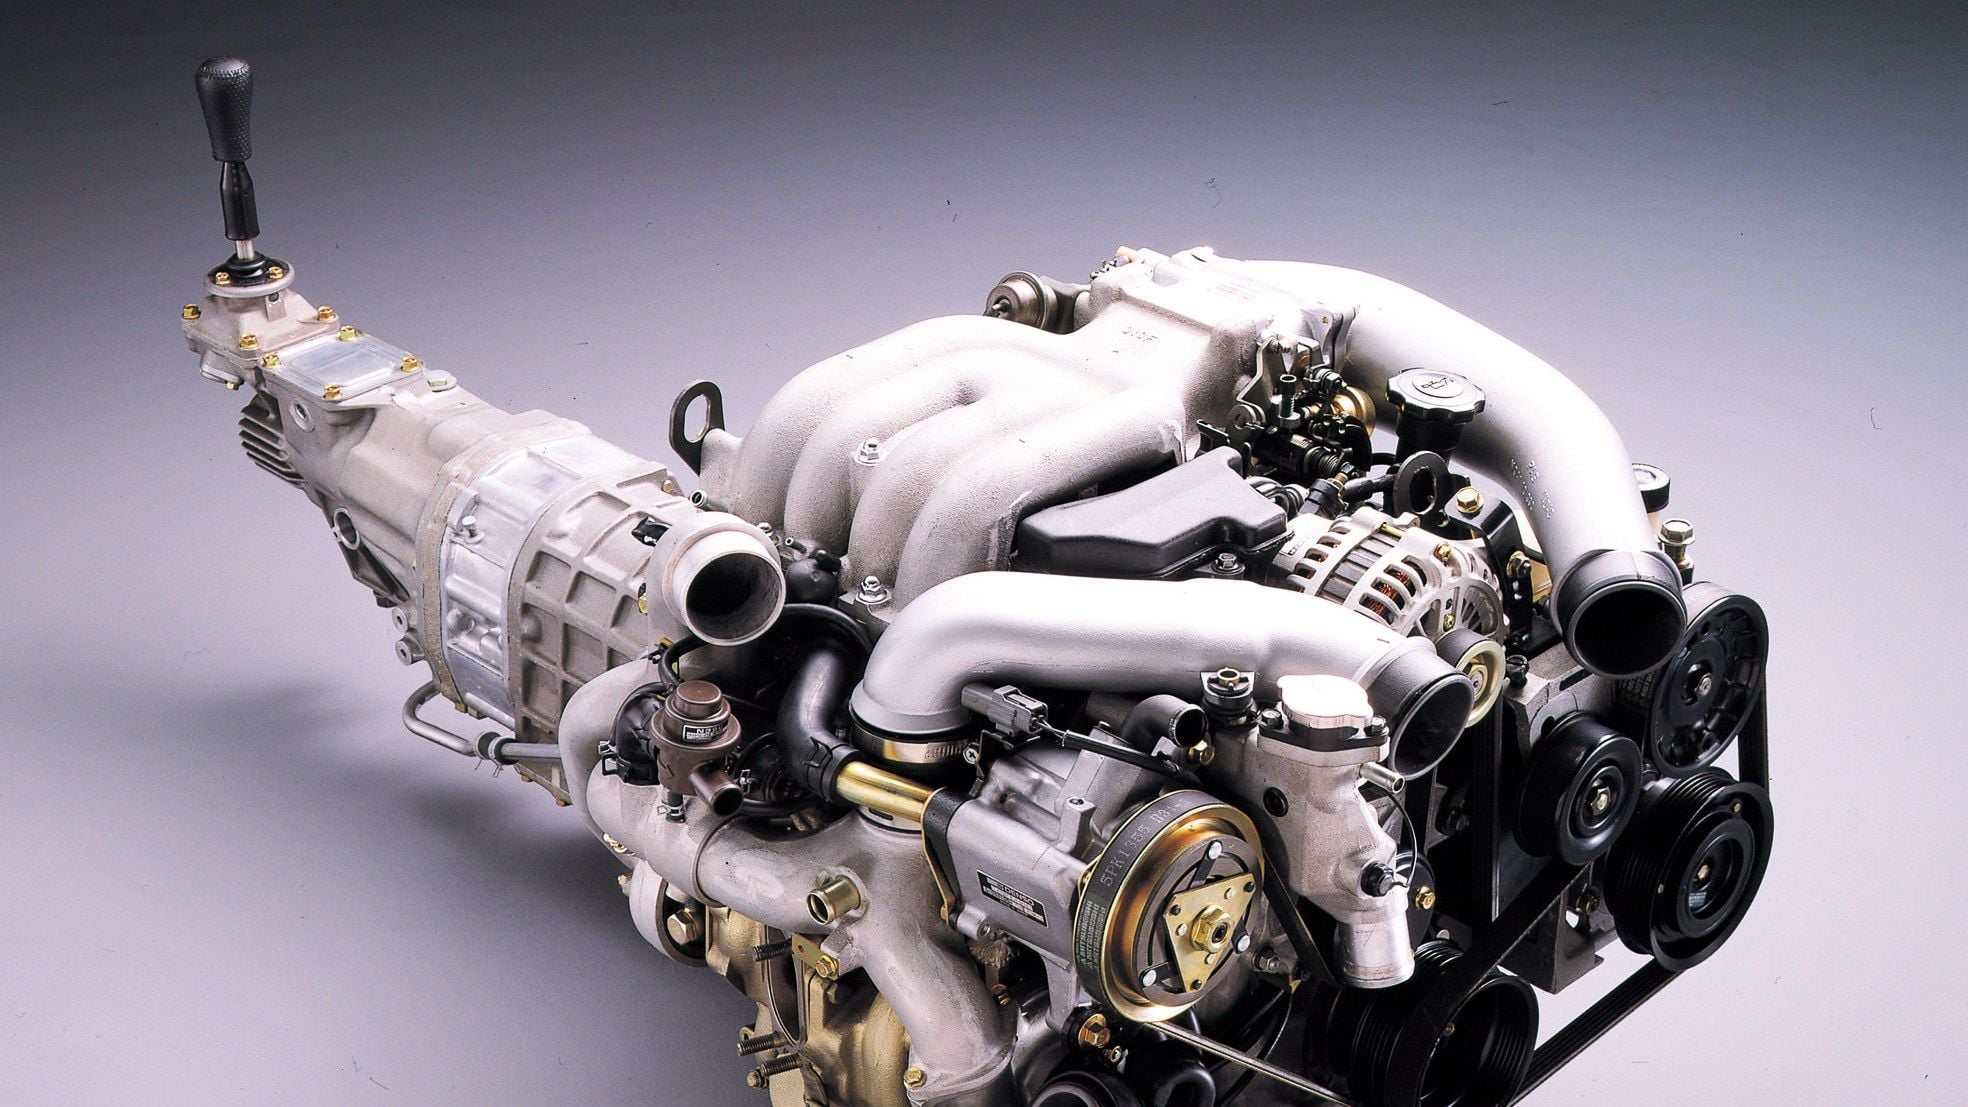 1994 Mazda RX-7 - Part Out: 13B-REW - Engine - Complete - $2,500 - Virginia Beach, VA 23456, United States